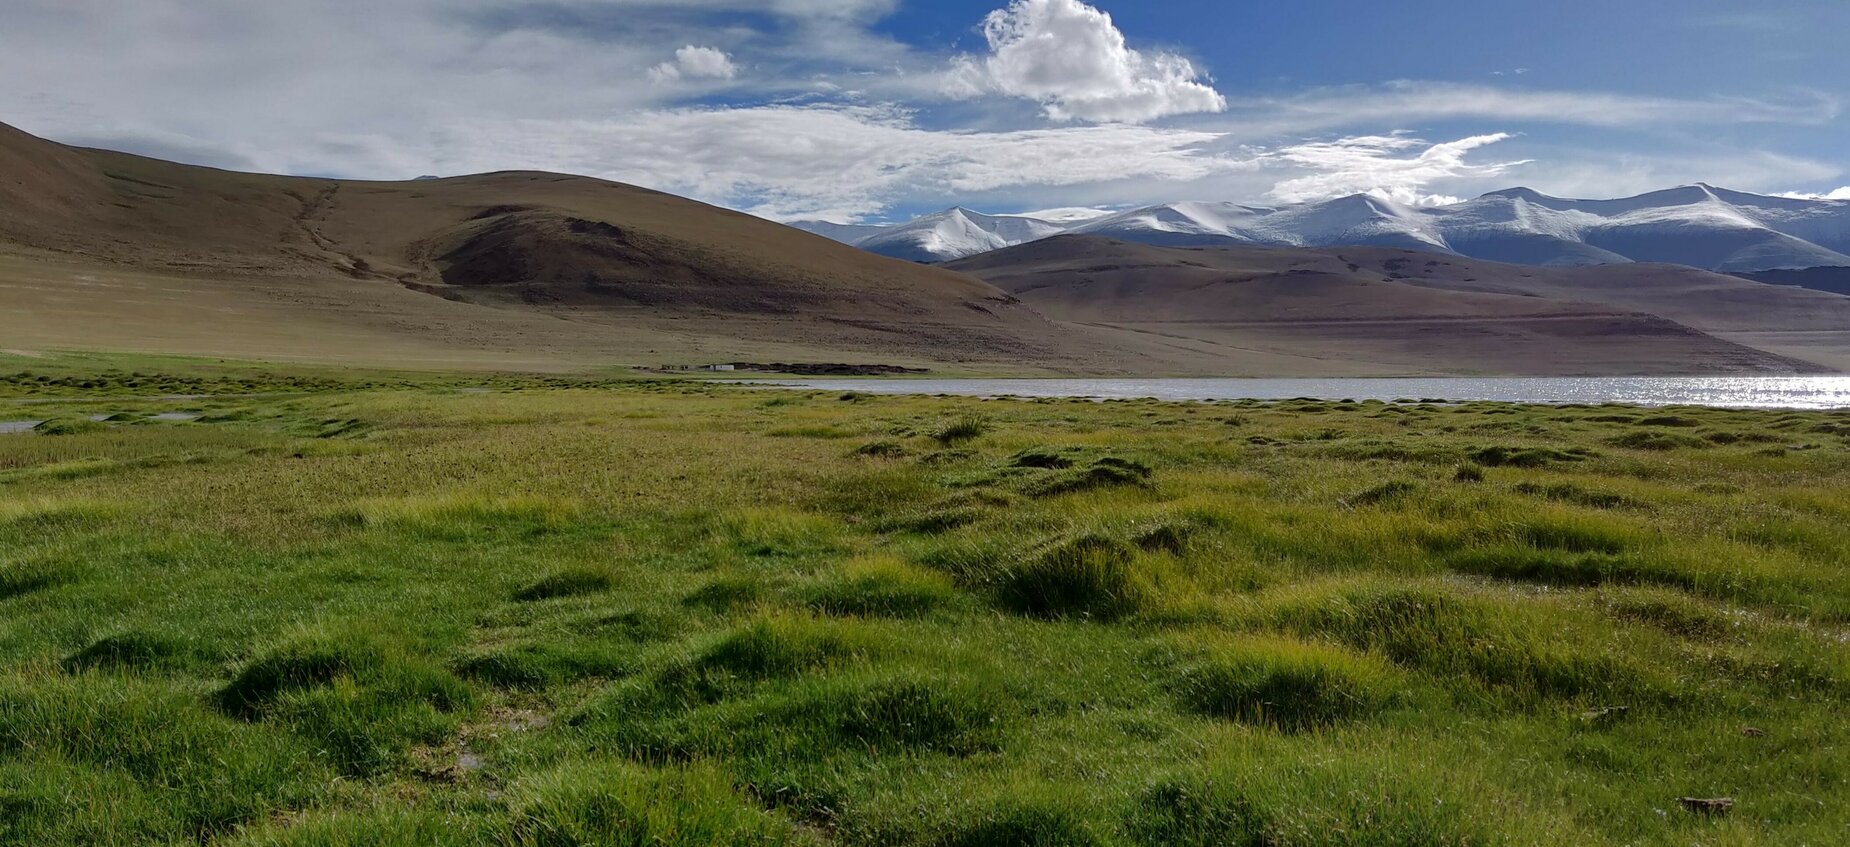 Ladakh&#x20;Pika&#x20;habitat&#x20;in&#x20;Tsokar,&#x20;Ladakh